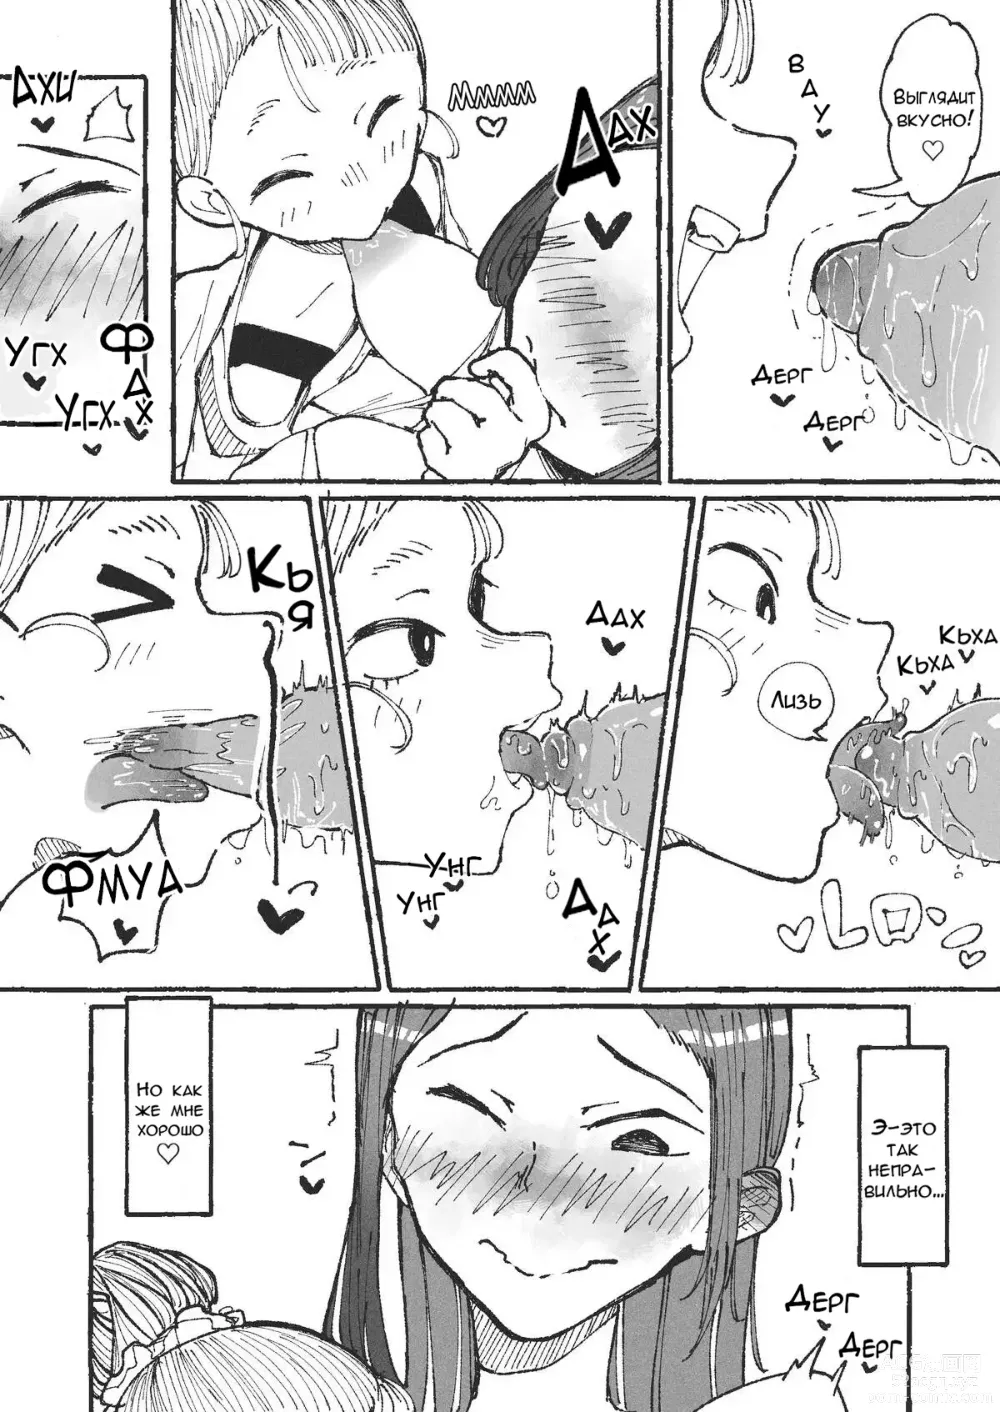 Page 6 of doujinshi Пока мужа нет дома, жена развлекают соседскую девчонку